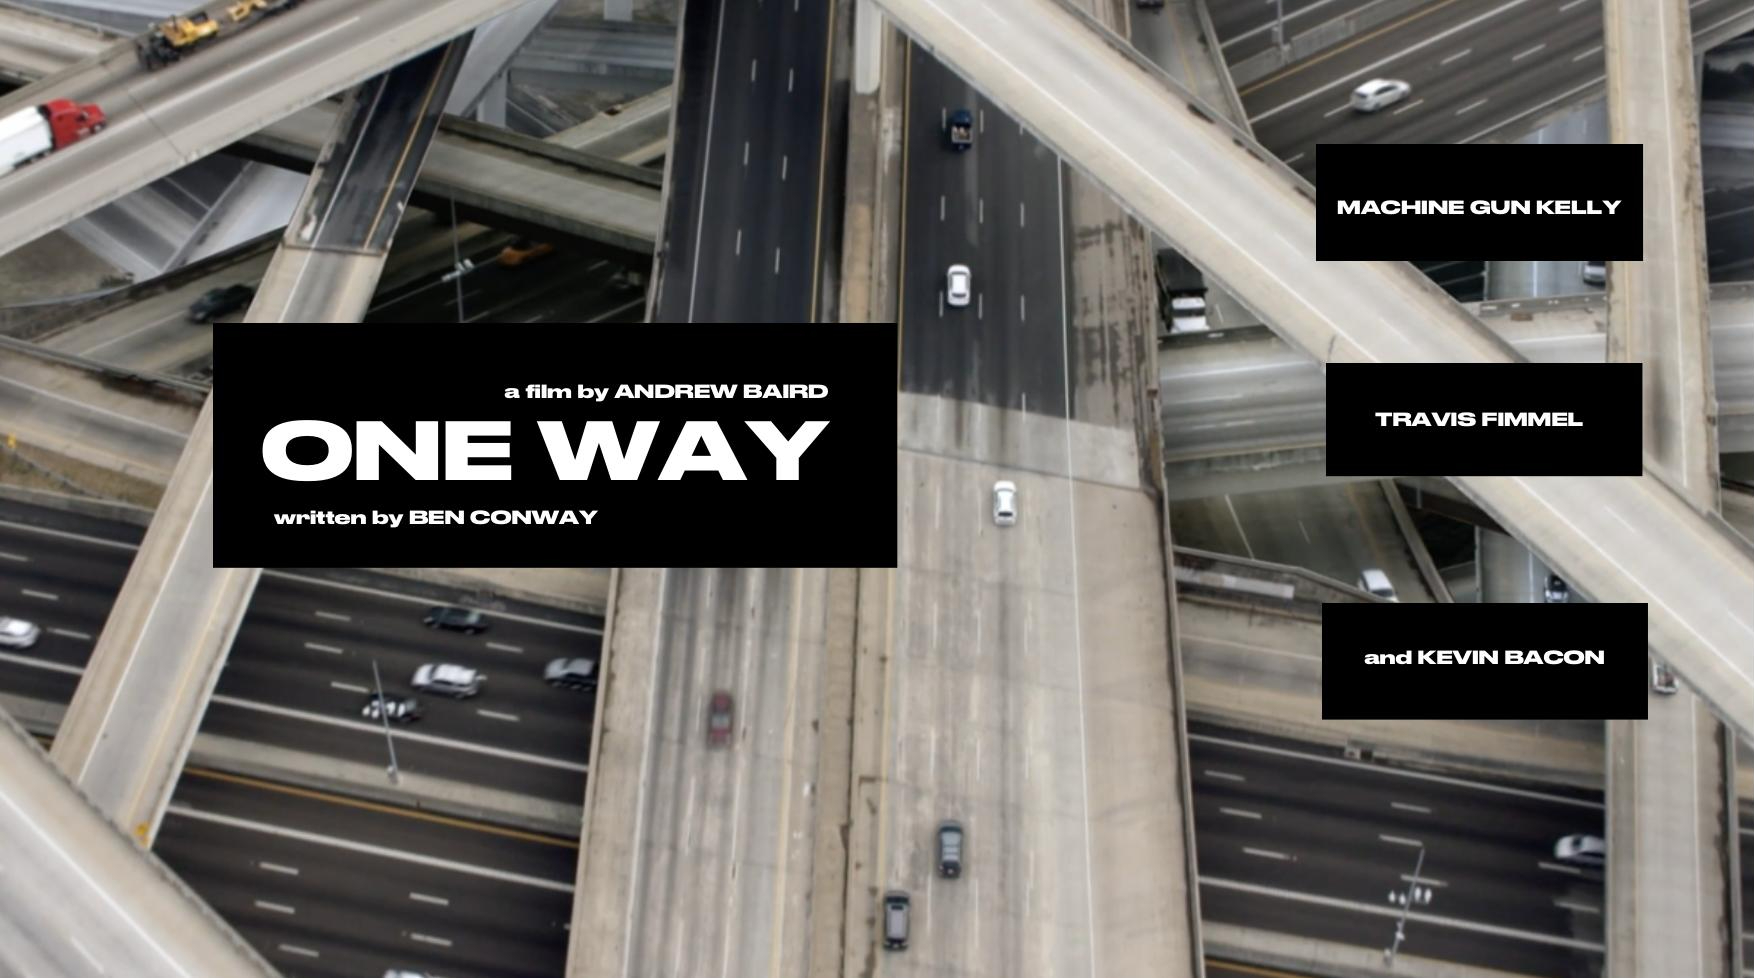 1st Trailer For 'One Way' Movie Starring Machine Gun Kelly, Storm Reid, & Kevin Bacon